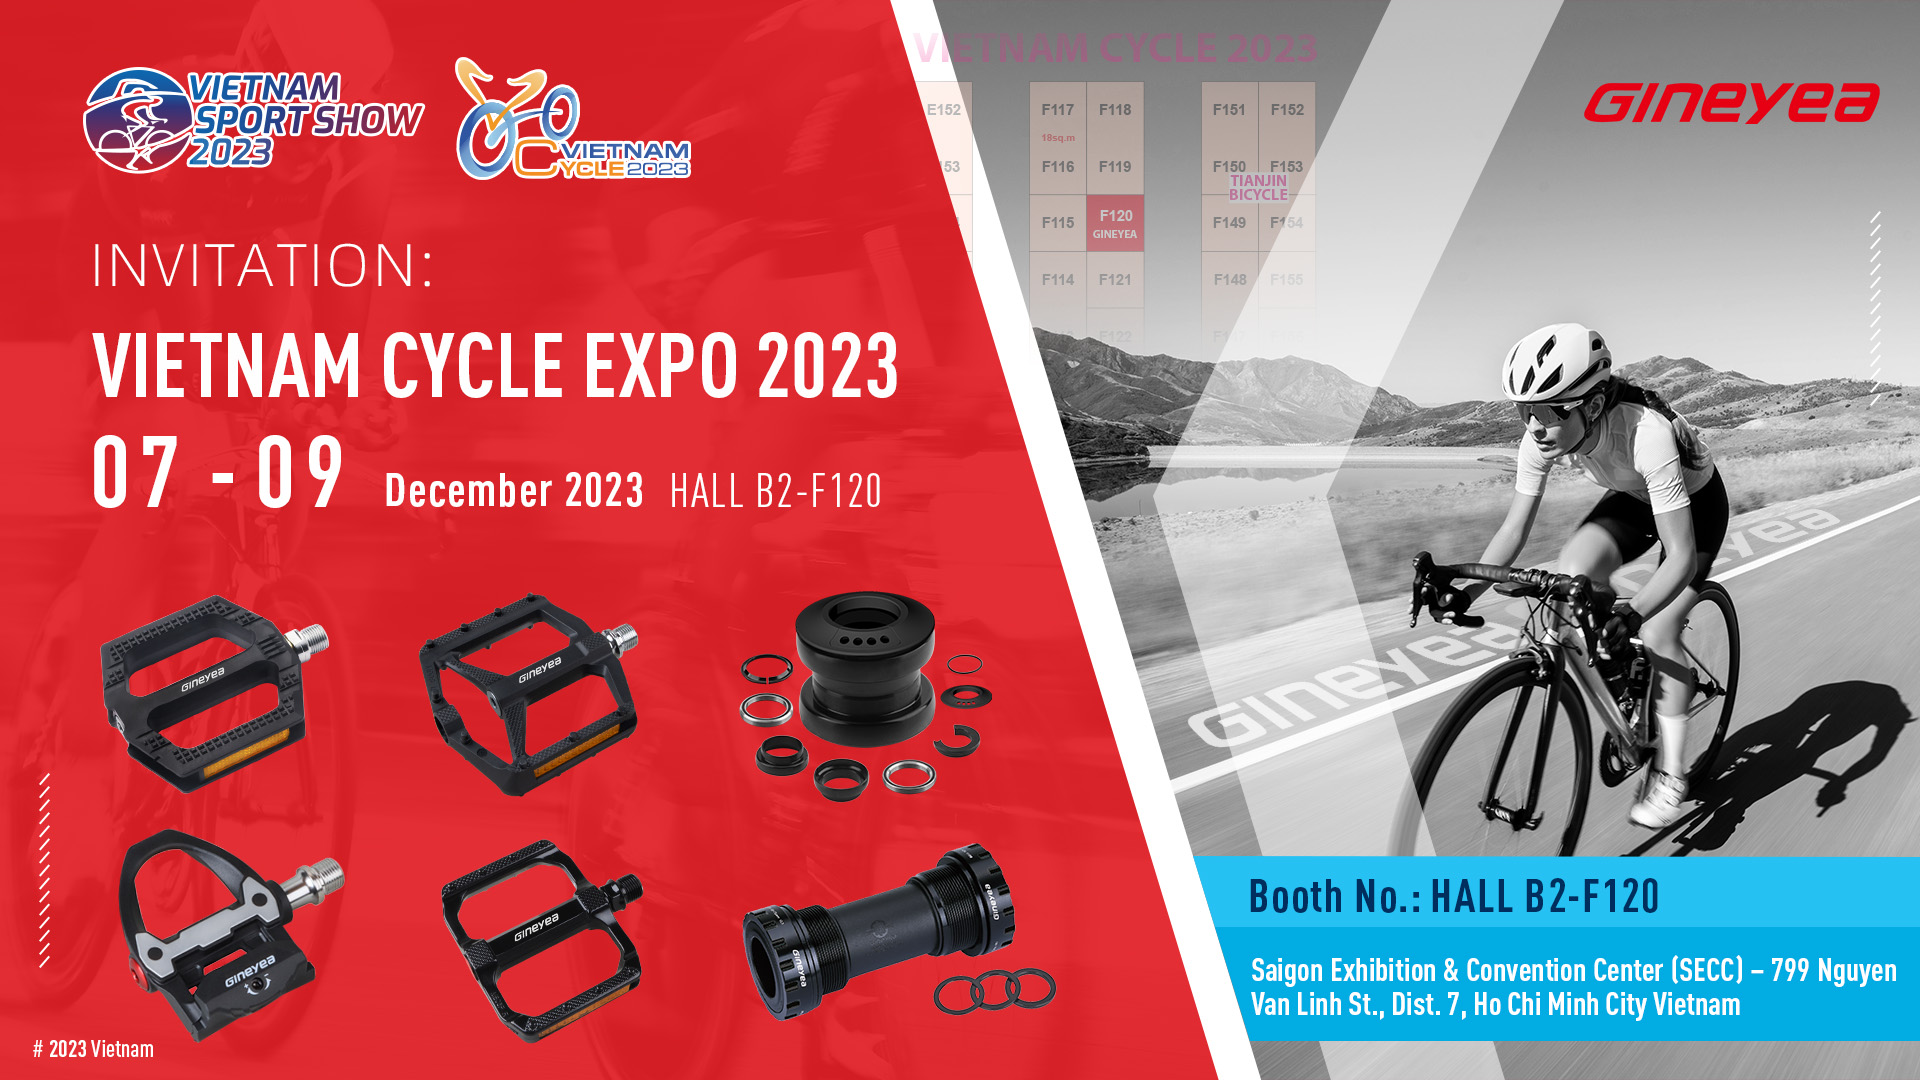 GINEYEA VIetnam Cycle Expo 2023 Invitaion